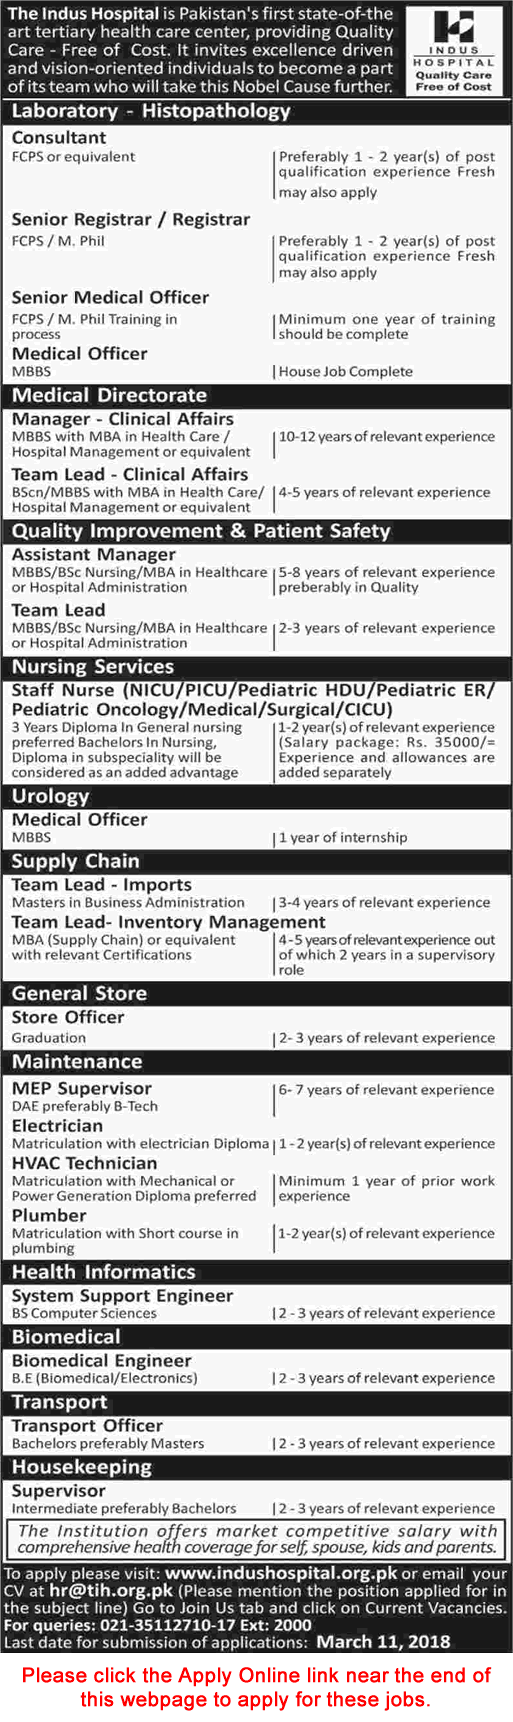 Indus Hospital Karachi Jobs February 2018 Apply Online Medical Officers, Staff Nurses & Others Latest